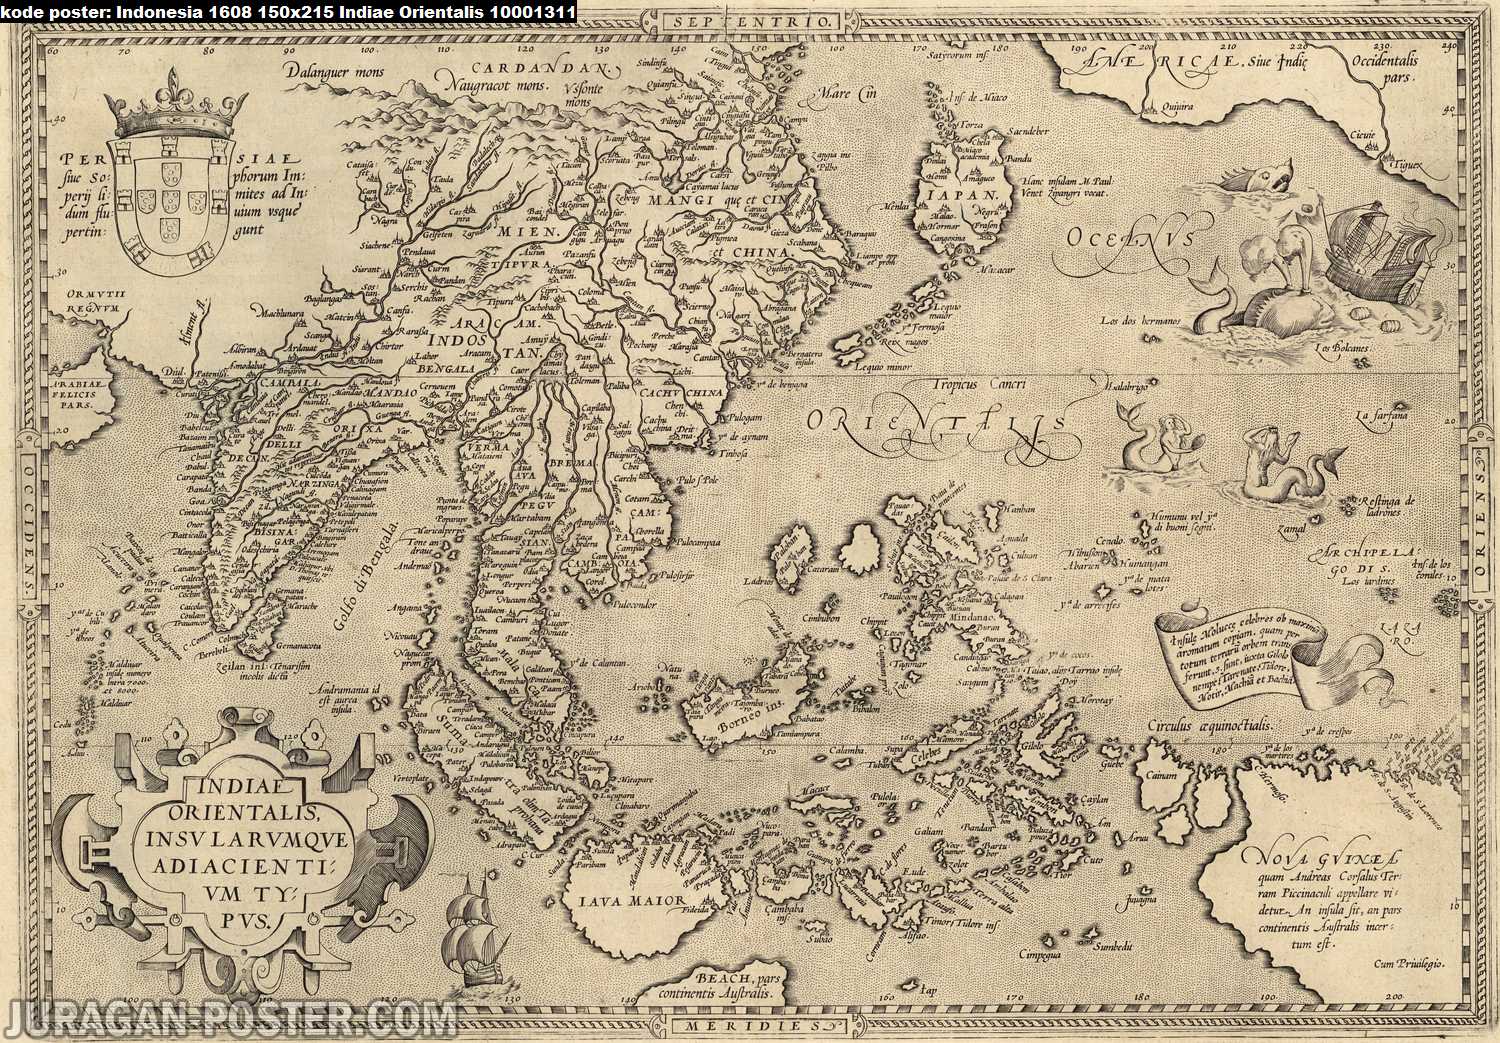 peta indonesia kuno tahun 1608